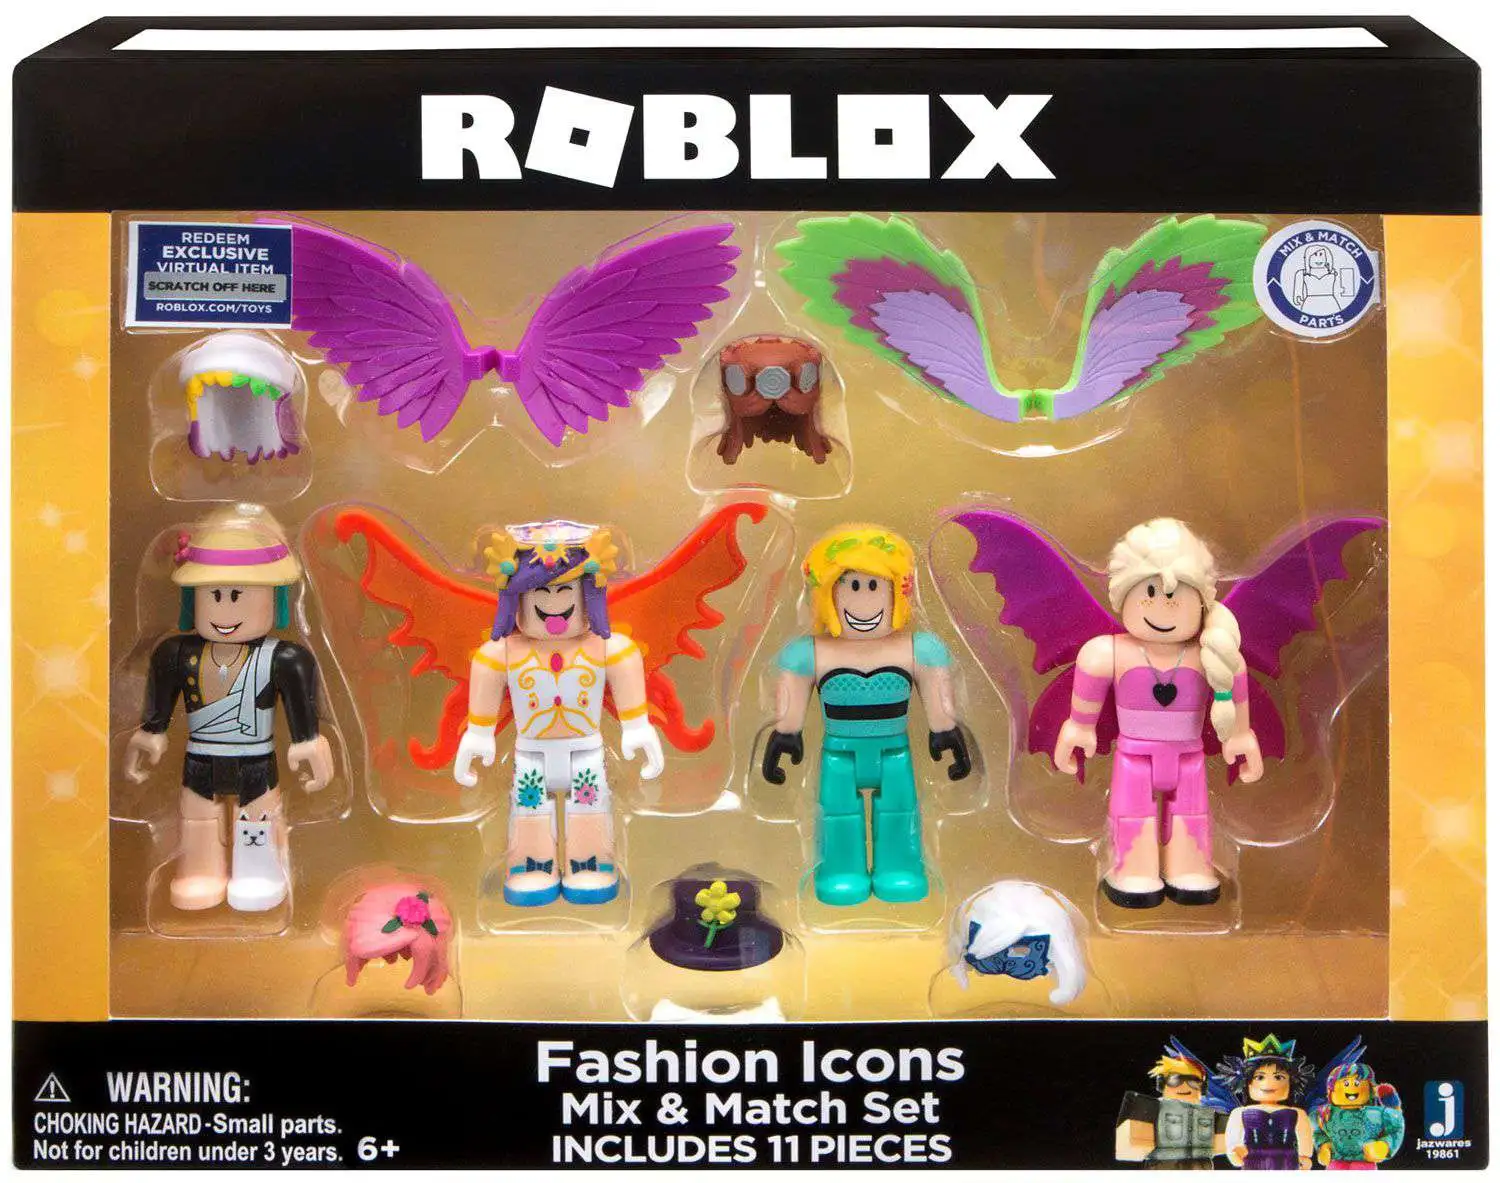 Roblox Design It Dreams Figure Pack Exclusive Virtual Item Code New